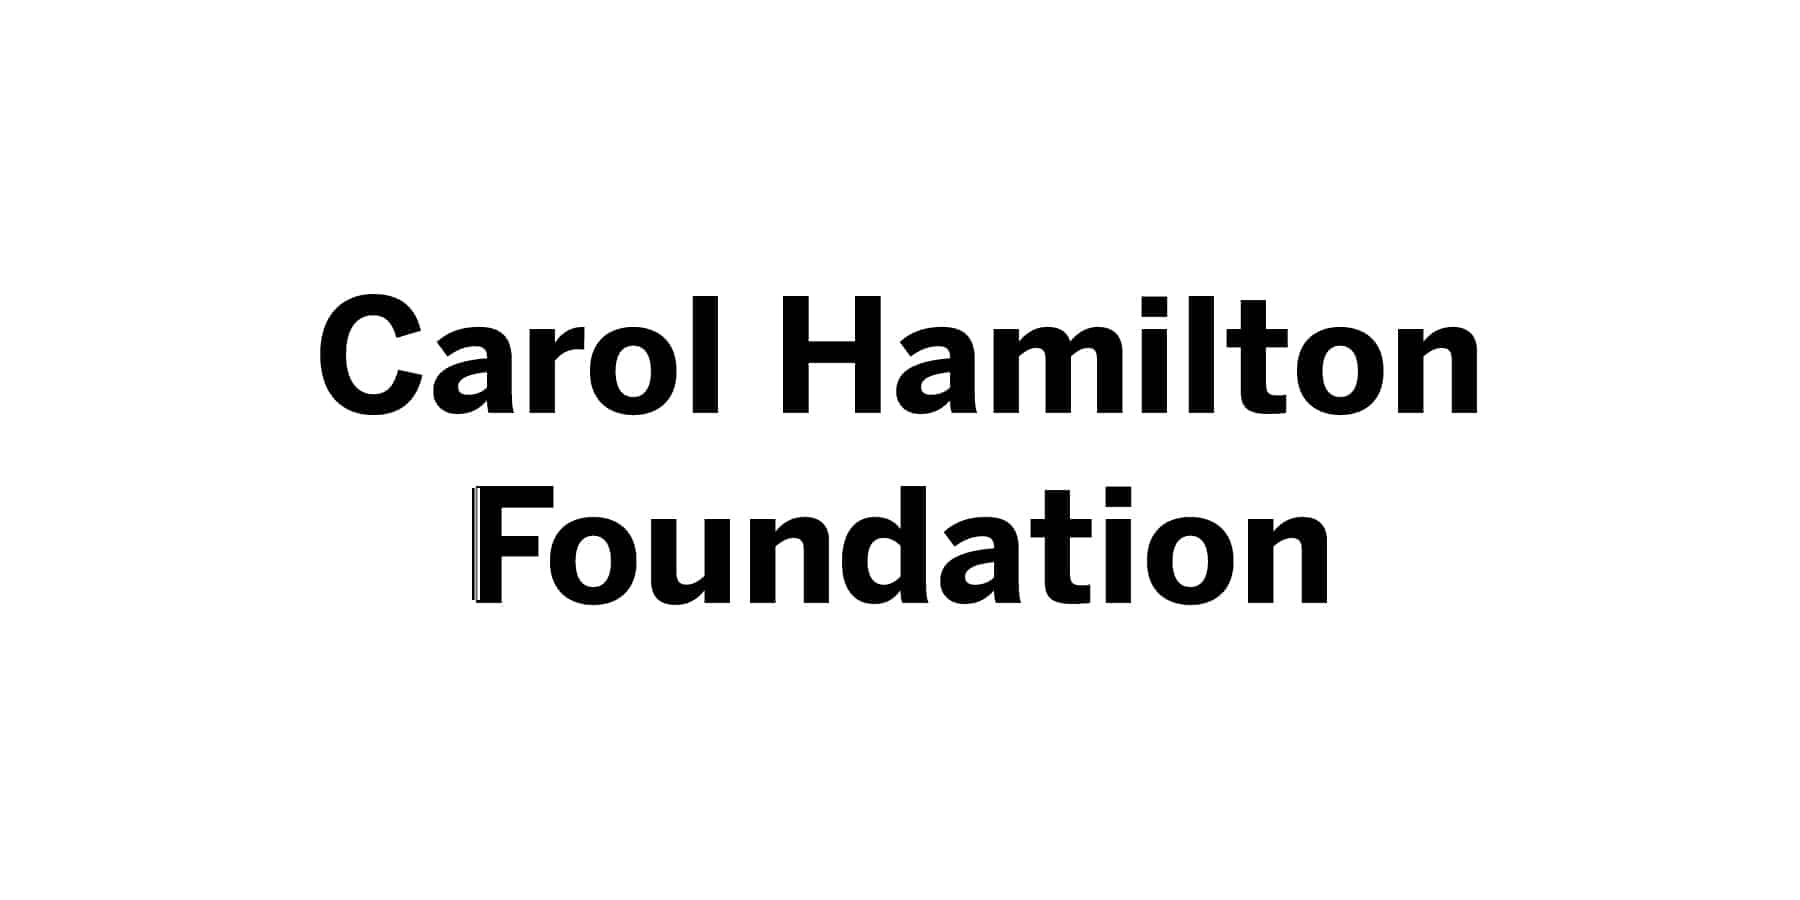 Carol Hamilton Foundation